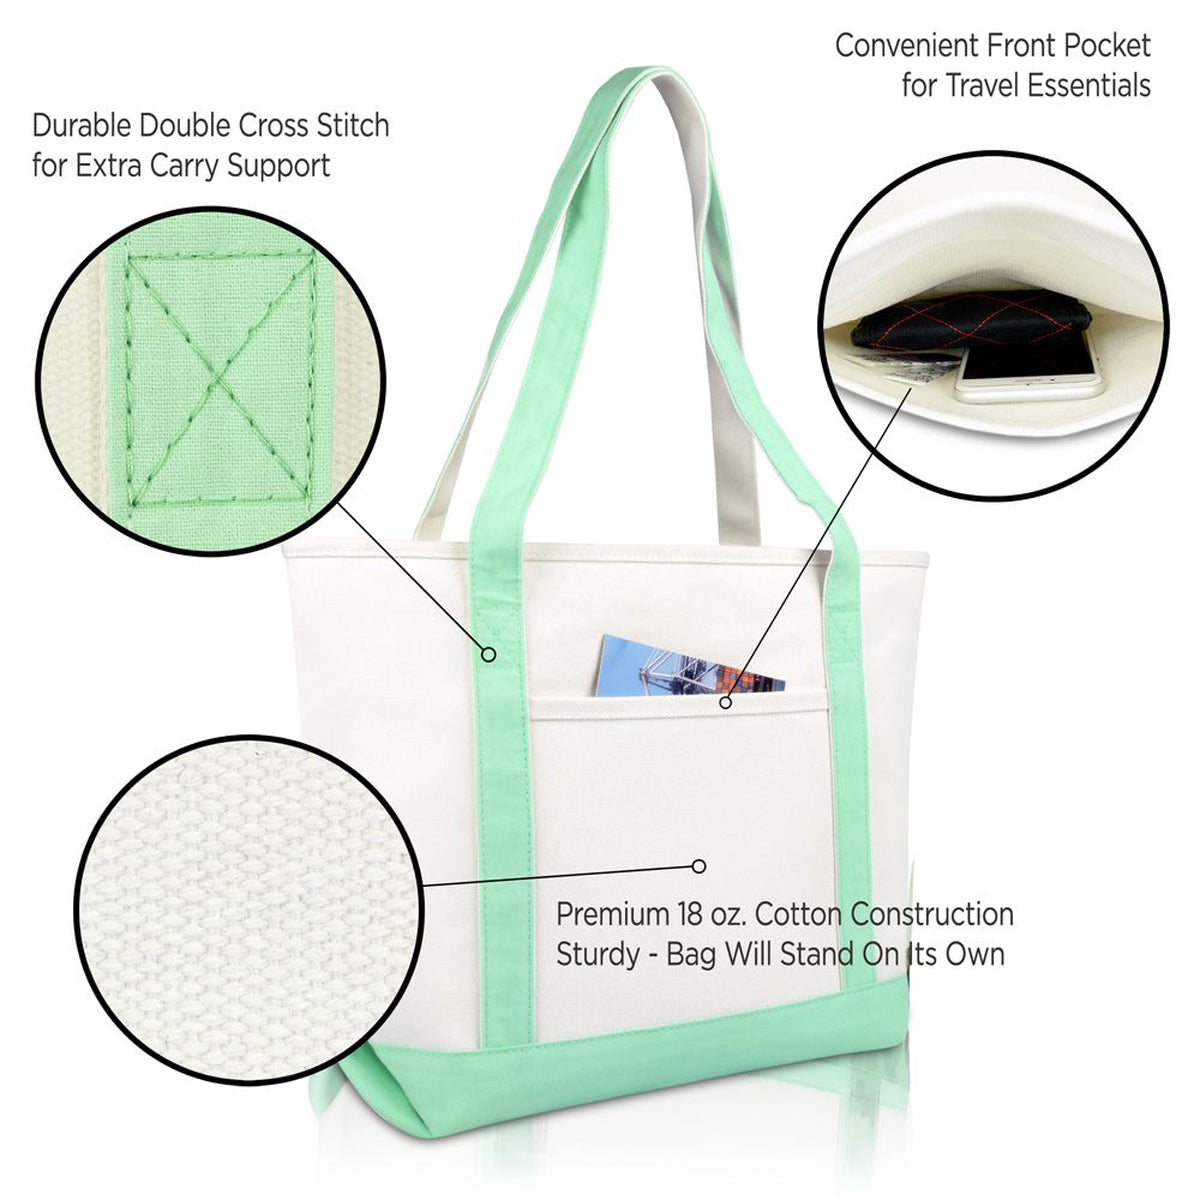 DALIX Daily Shoulder Tote Bag Premium Cotton Canvas | Dalix.com